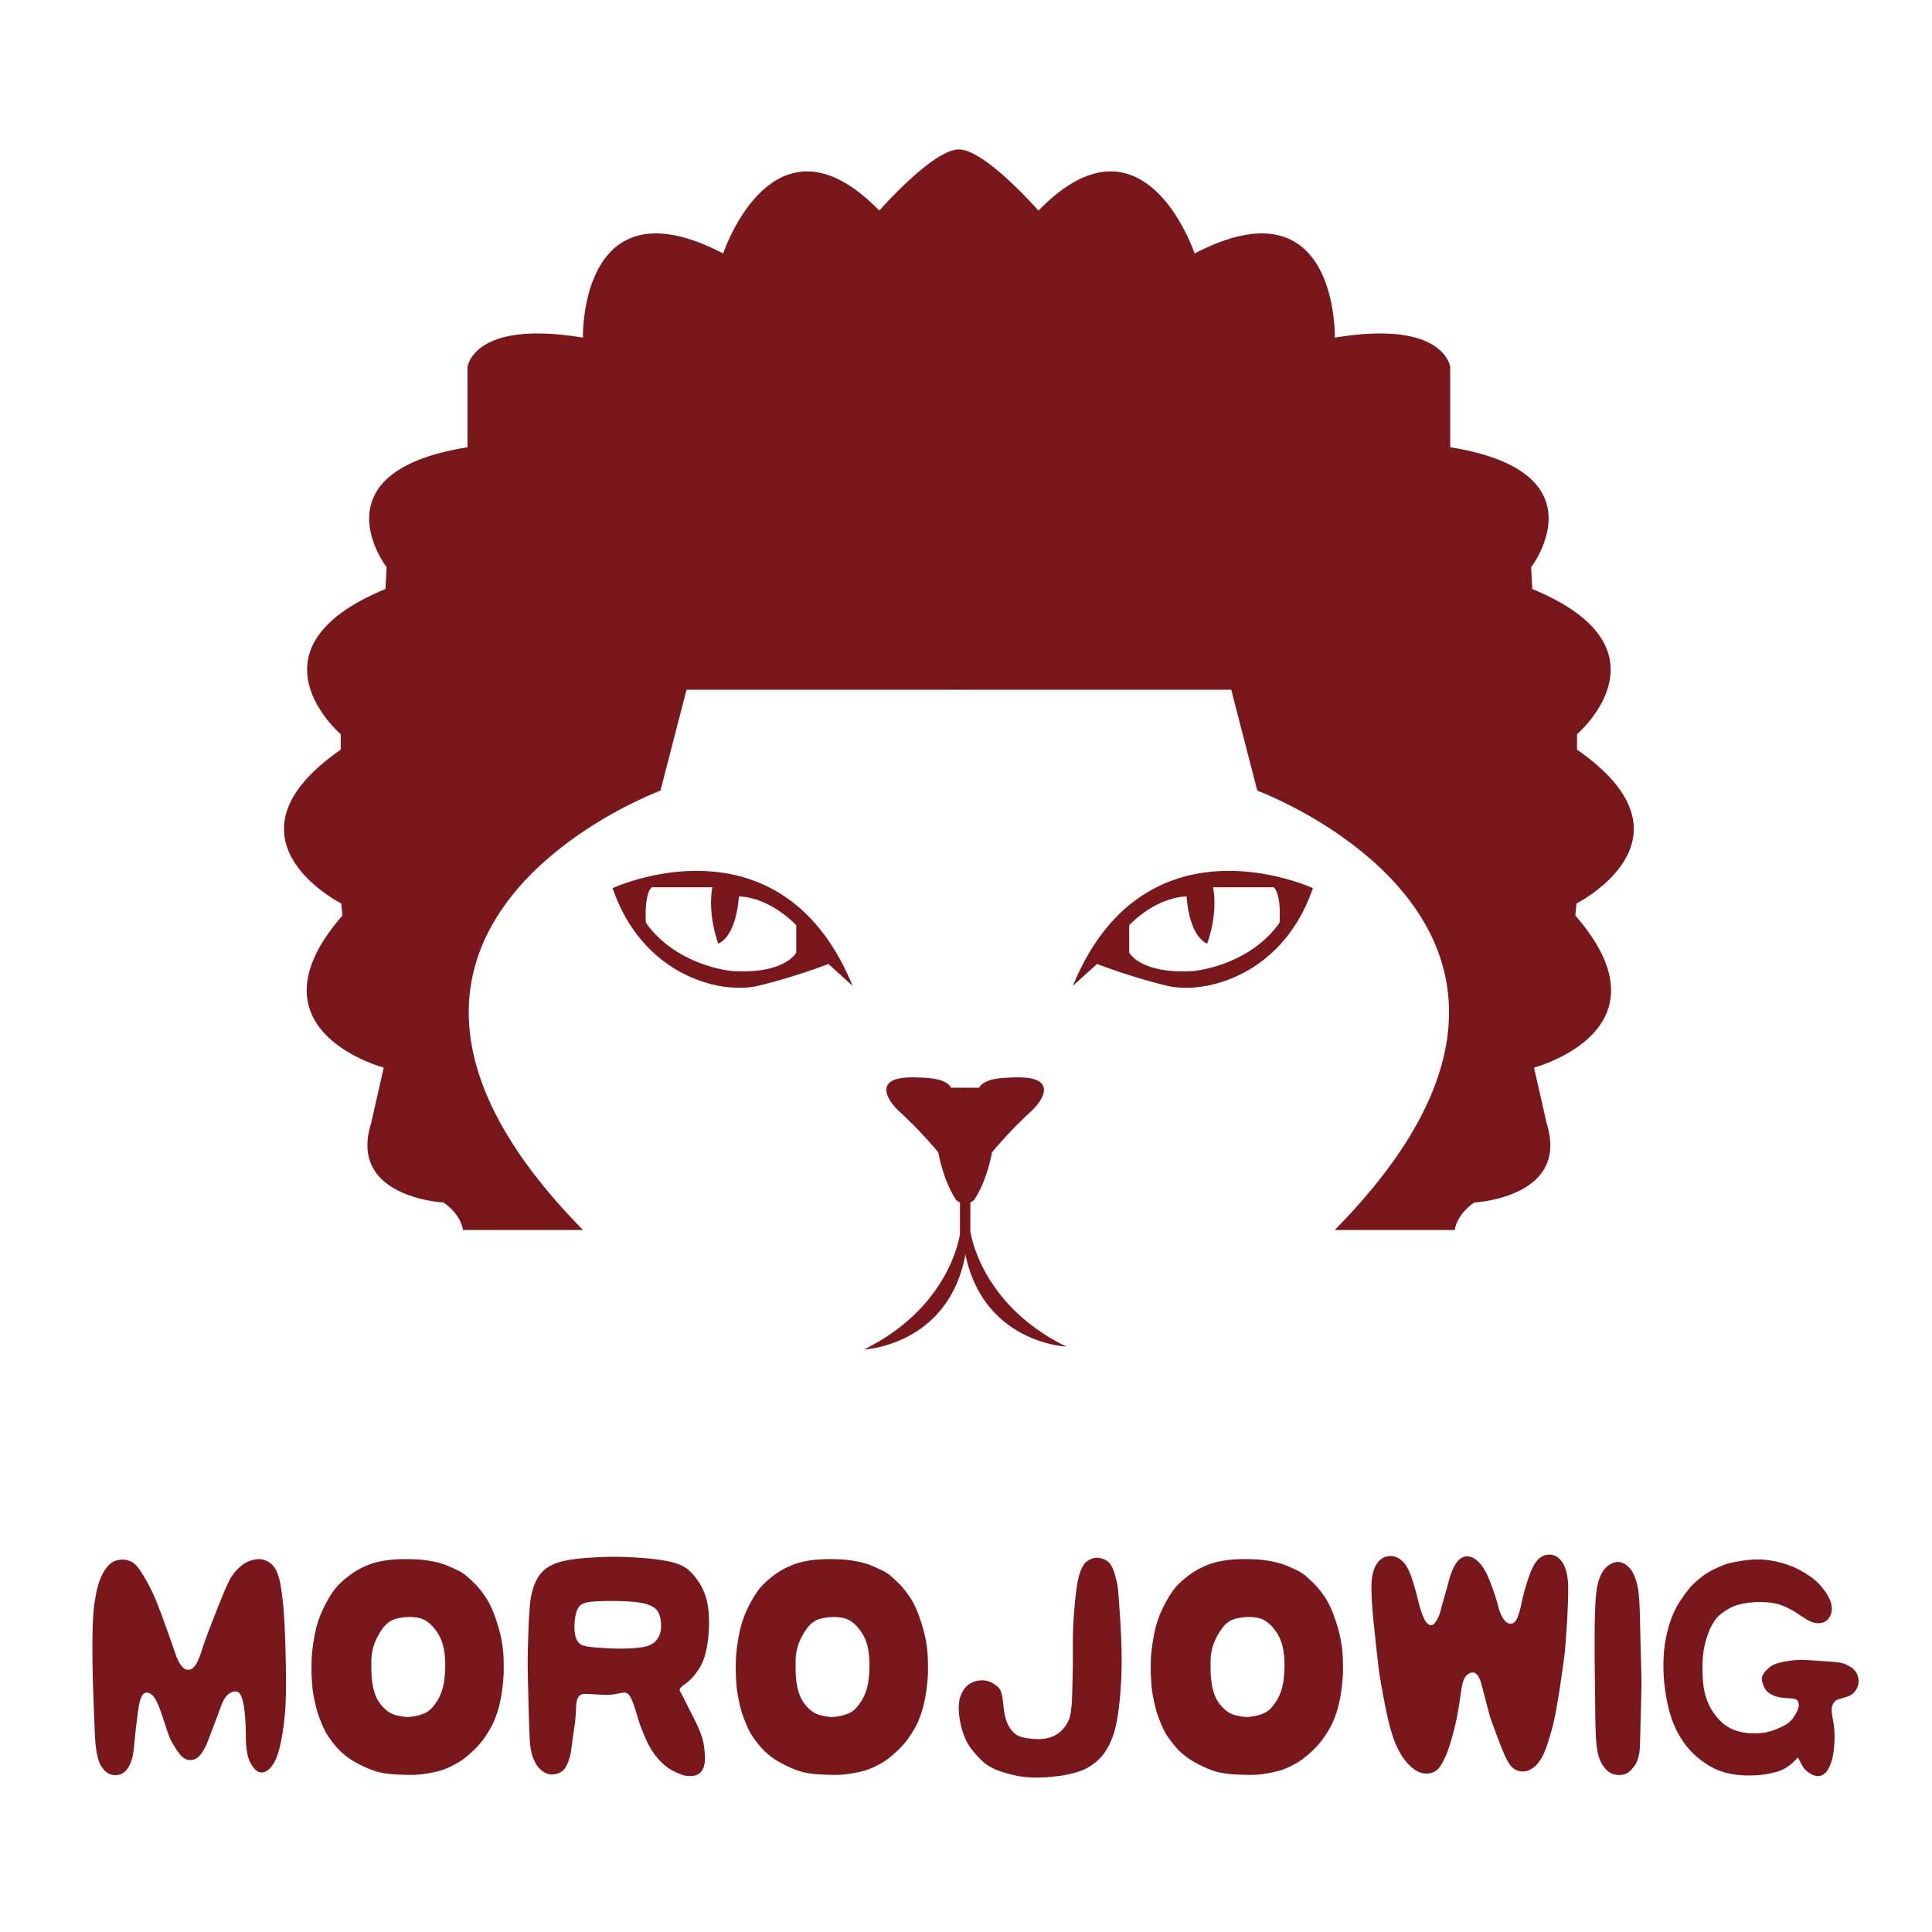 Company logo of Morojowig